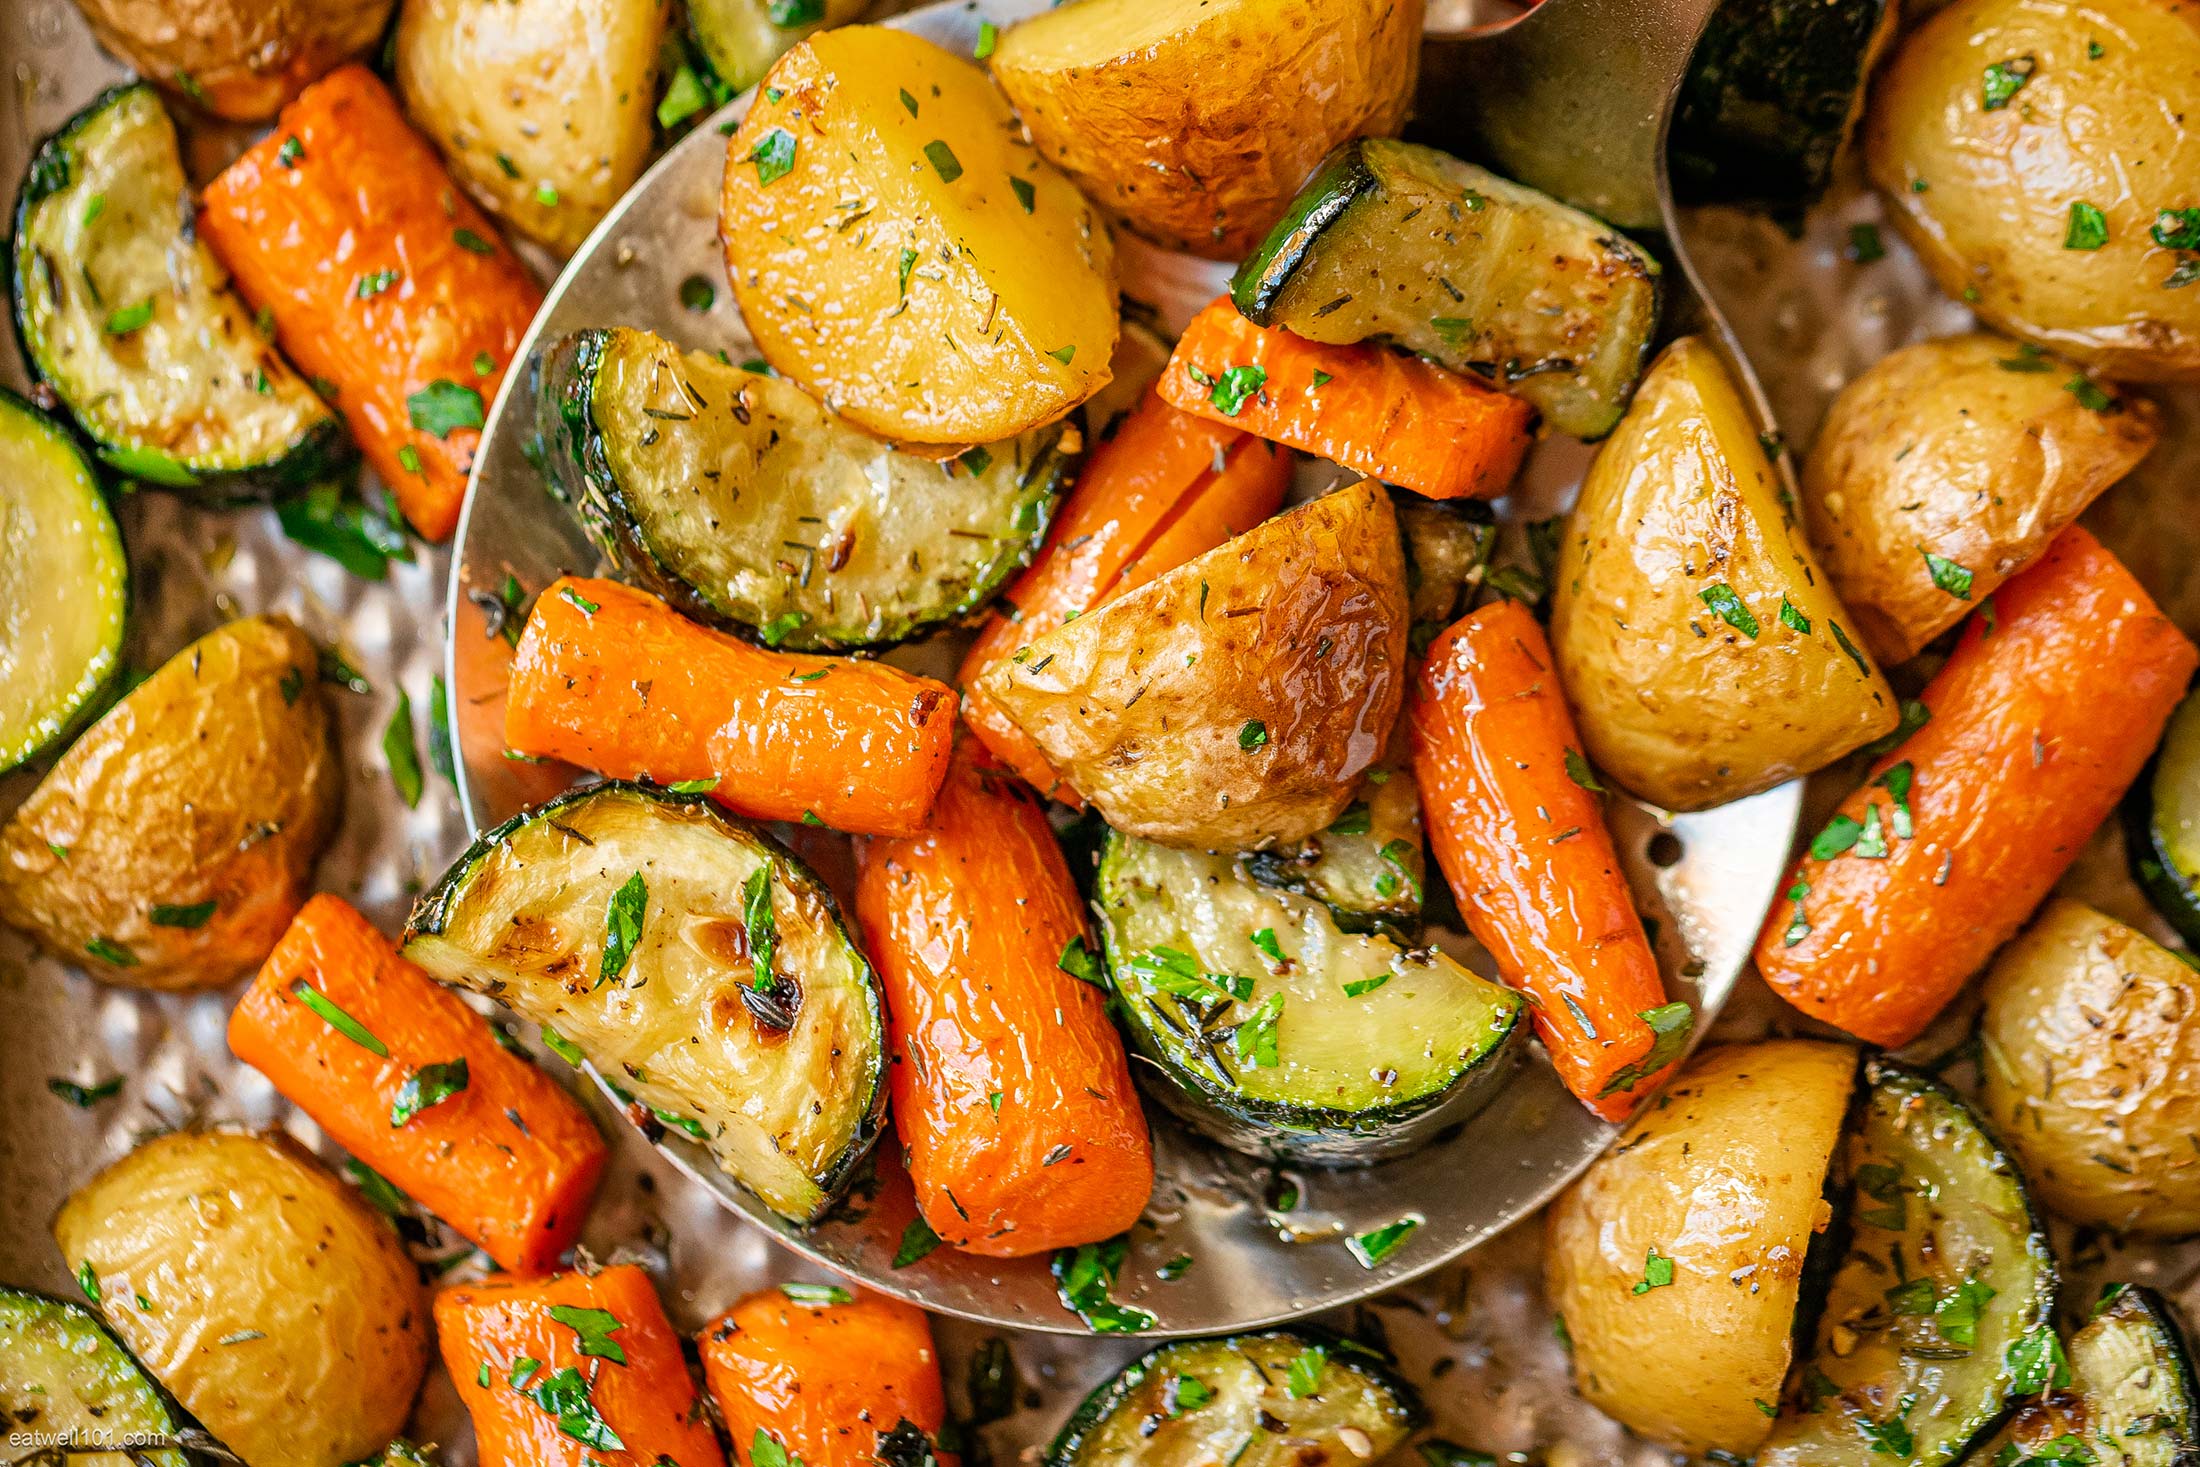 https://www.eatwell101.com/wp-content/uploads/2020/10/Garlic-Herb-Roasted-Potatoes-Carrots-and-Zucchini-recipe.jpg